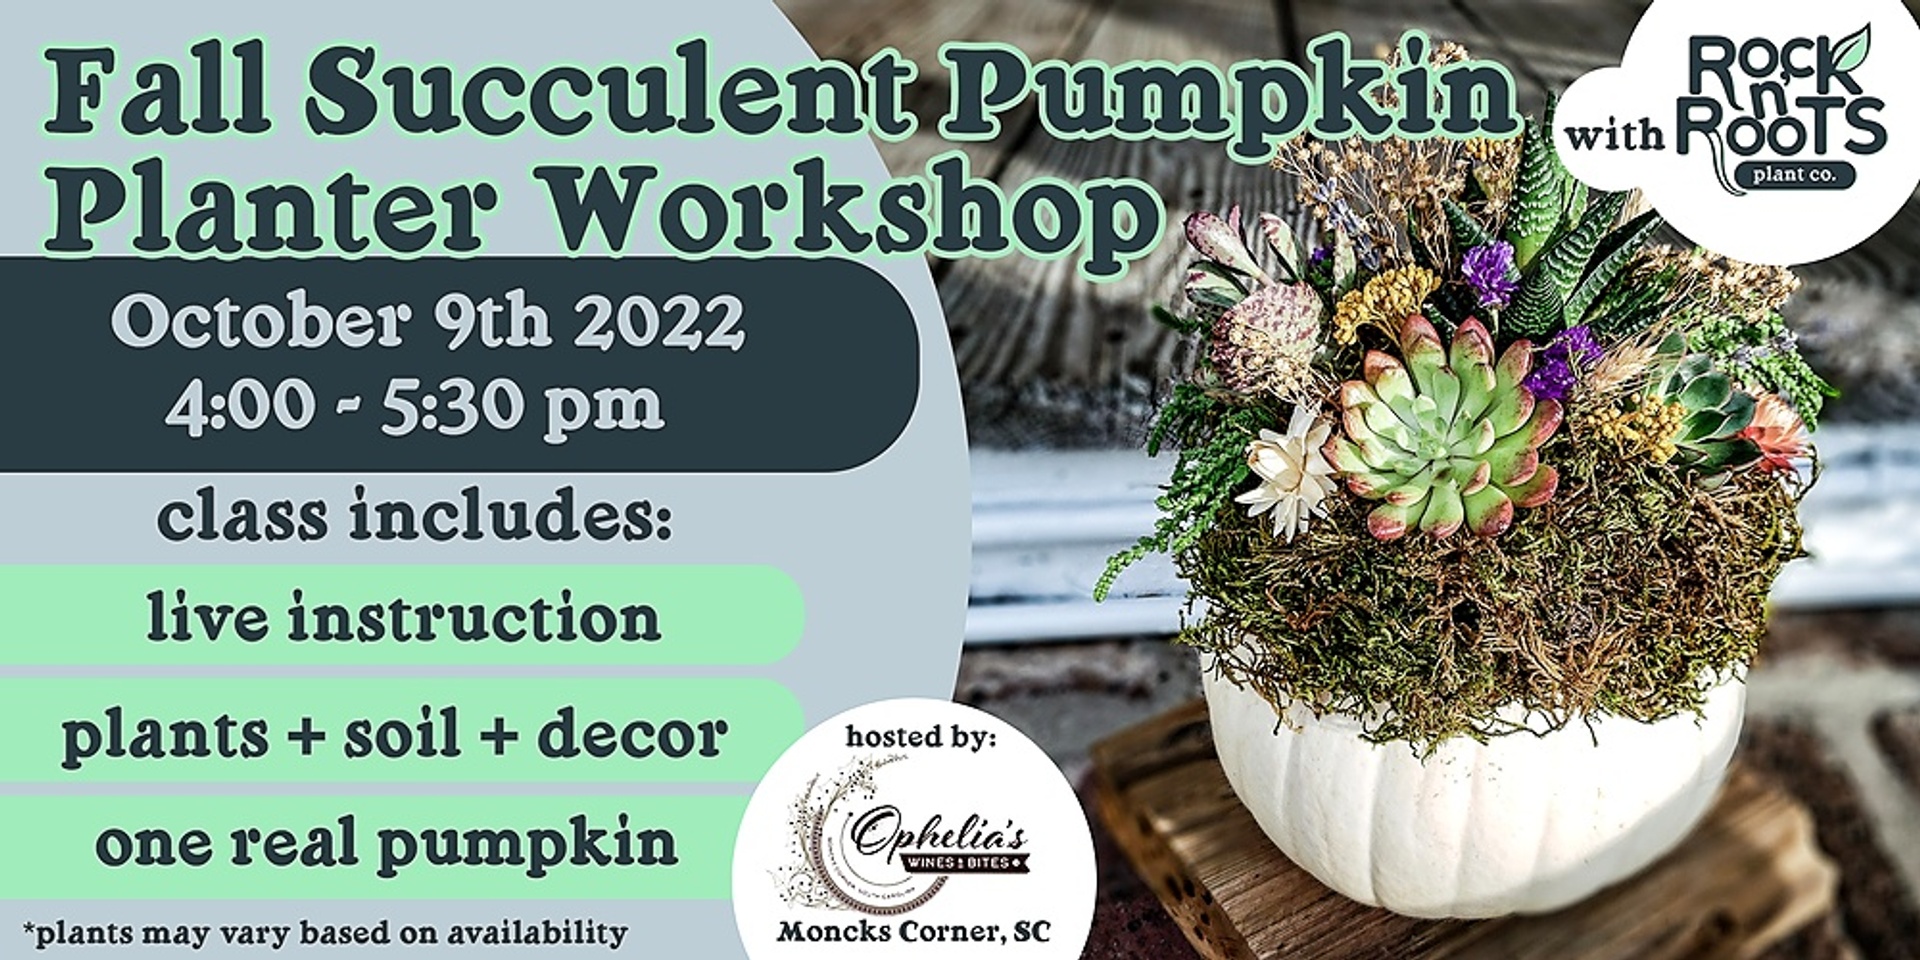 Fall Succulent Pumpkin Planter Workshop at Ophelia's Wines & Bites (Moncks Corner, SC)